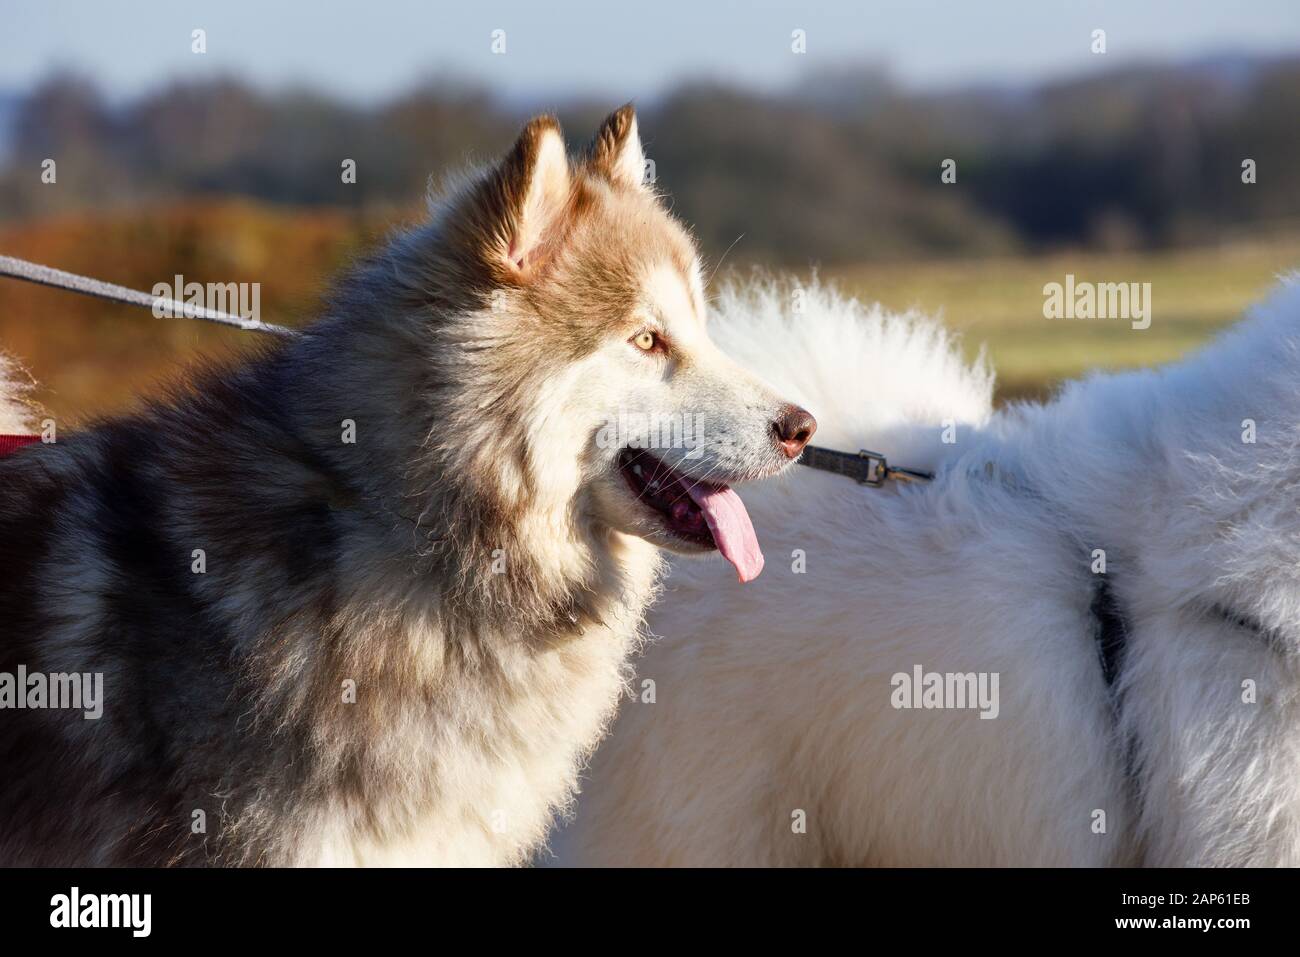 Professionelle Dog Walker mit Alaskan Malamute und Bulldog Rassen. Stockfoto